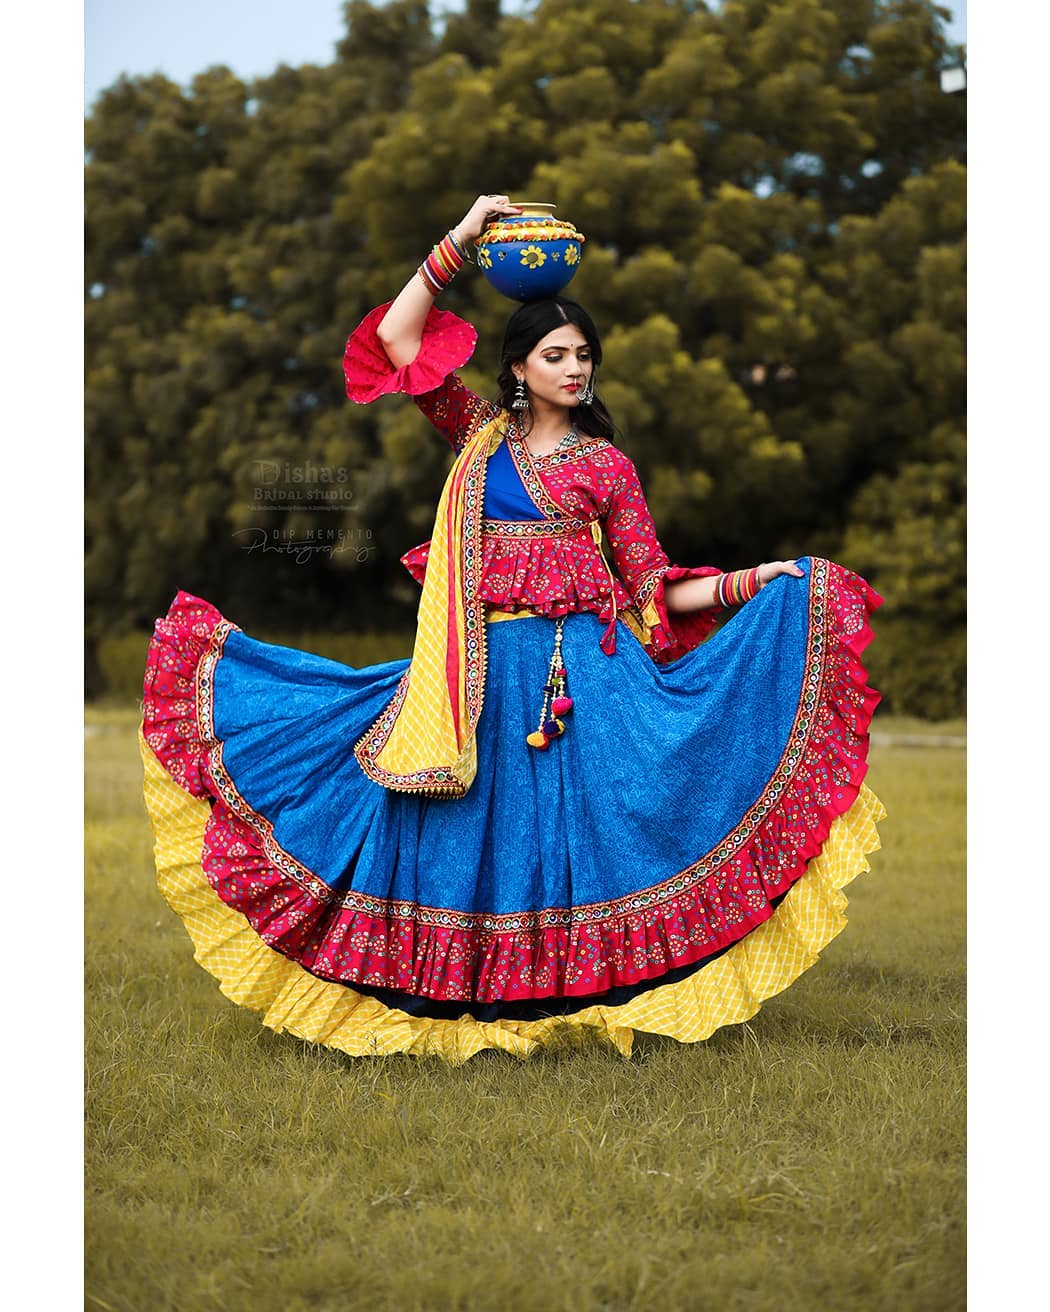 Untill you spread your wings you will have no idea how far you can fly.....#navratri #navratri2019 #navratri2k19
.
MUA: @dishapanchal246 
Shoot: @dip_memento_photography 
@meandmyphotography11
 InFrame: @imug_pandey 
Jewellery: @nancyhandicraft9
Costume by: @rashmithummar

#navratri2019 #photoshoot #ethnic #traditionalart #ahmedabad #gujarati  #pop #makeup #navratrichaniyacholi #chaniyacholi #indianfashionblogger  #fashionblogger #makeuptutorial #weddingdress  #instapic #bollywood #bollywoodhotness #bollywoodactresses #indian #pic #picoftheday #photooftheday  #festivalofnations #festival